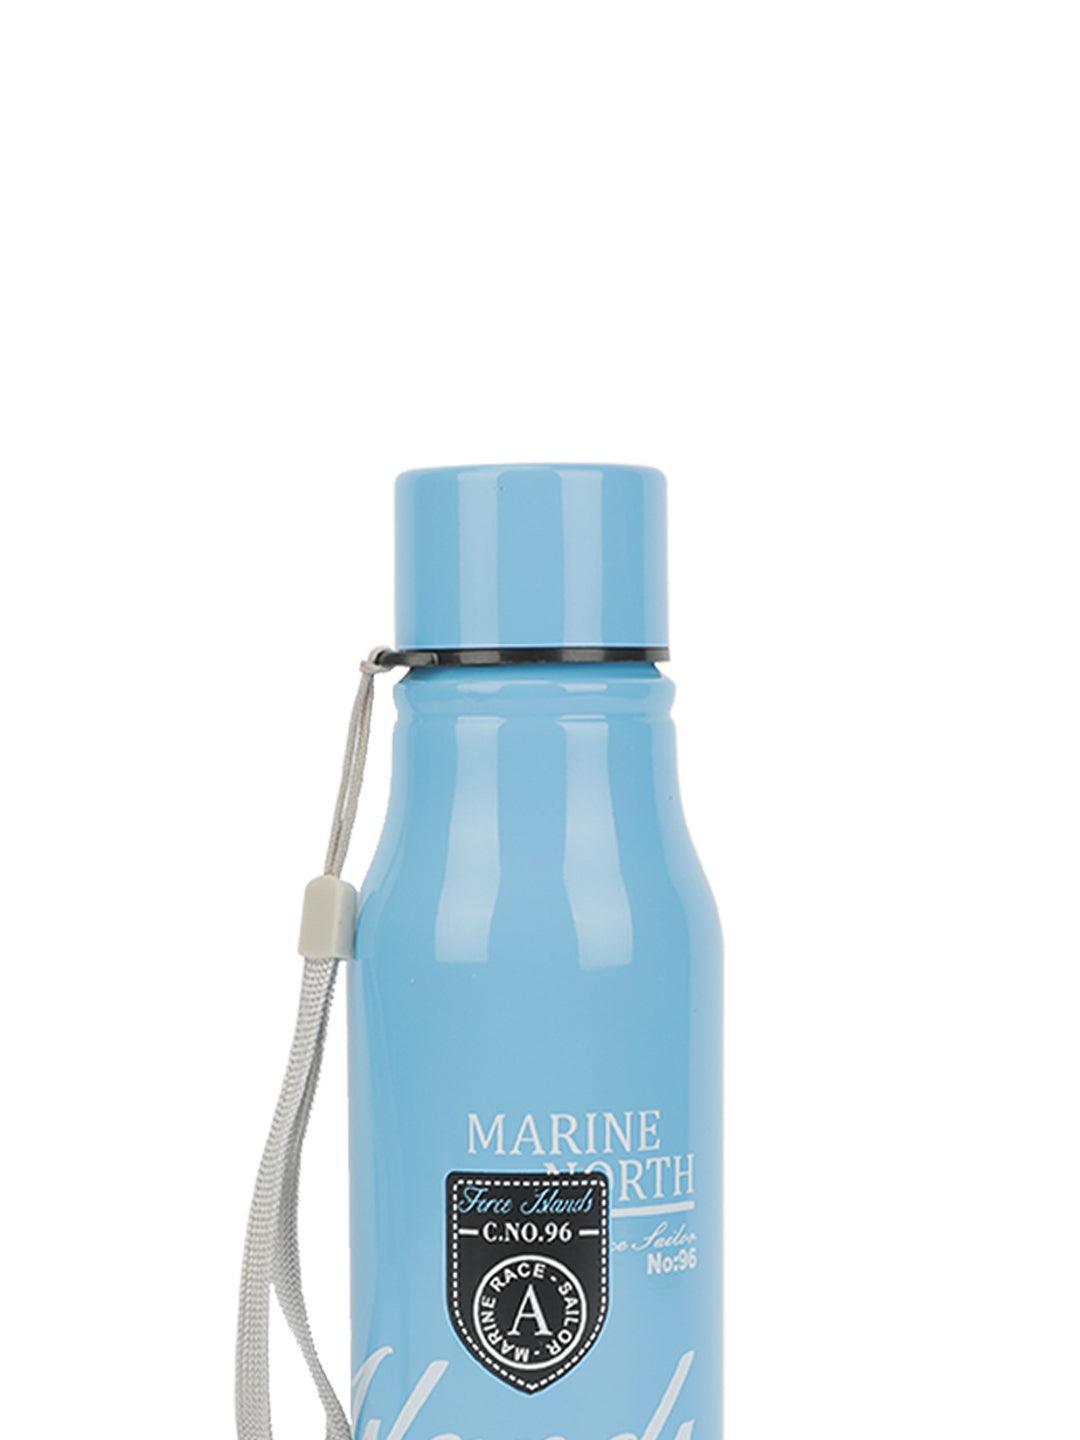 Market99 750Ml Stainless Steel Water Bottles - MARKET 99